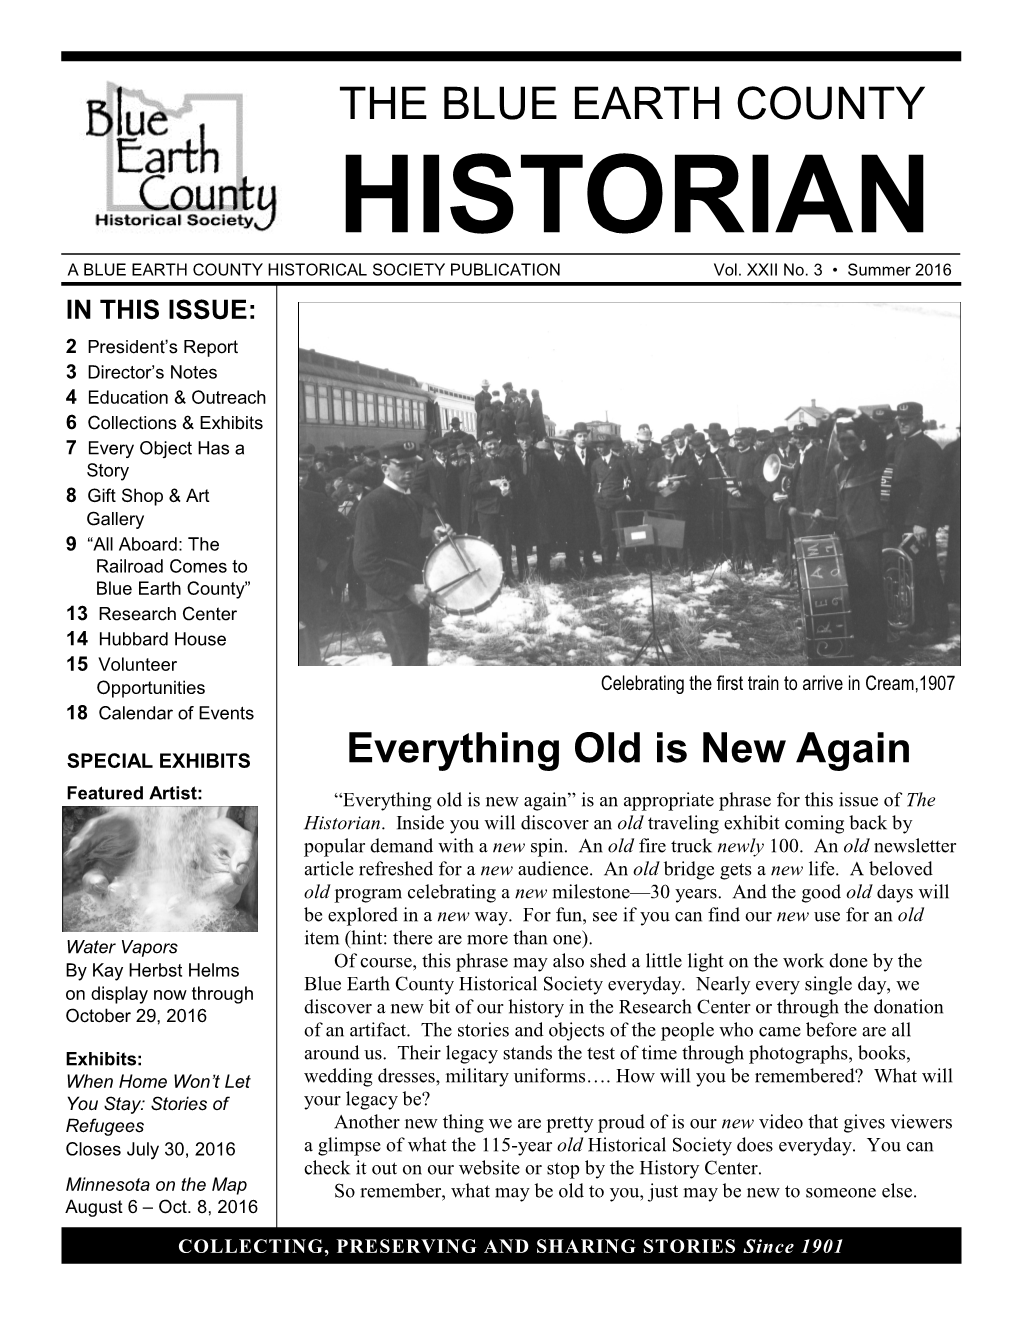 HISTORIAN a BLUE EARTH COUNTY HISTORICAL SOCIETY PUBLICATION Vol